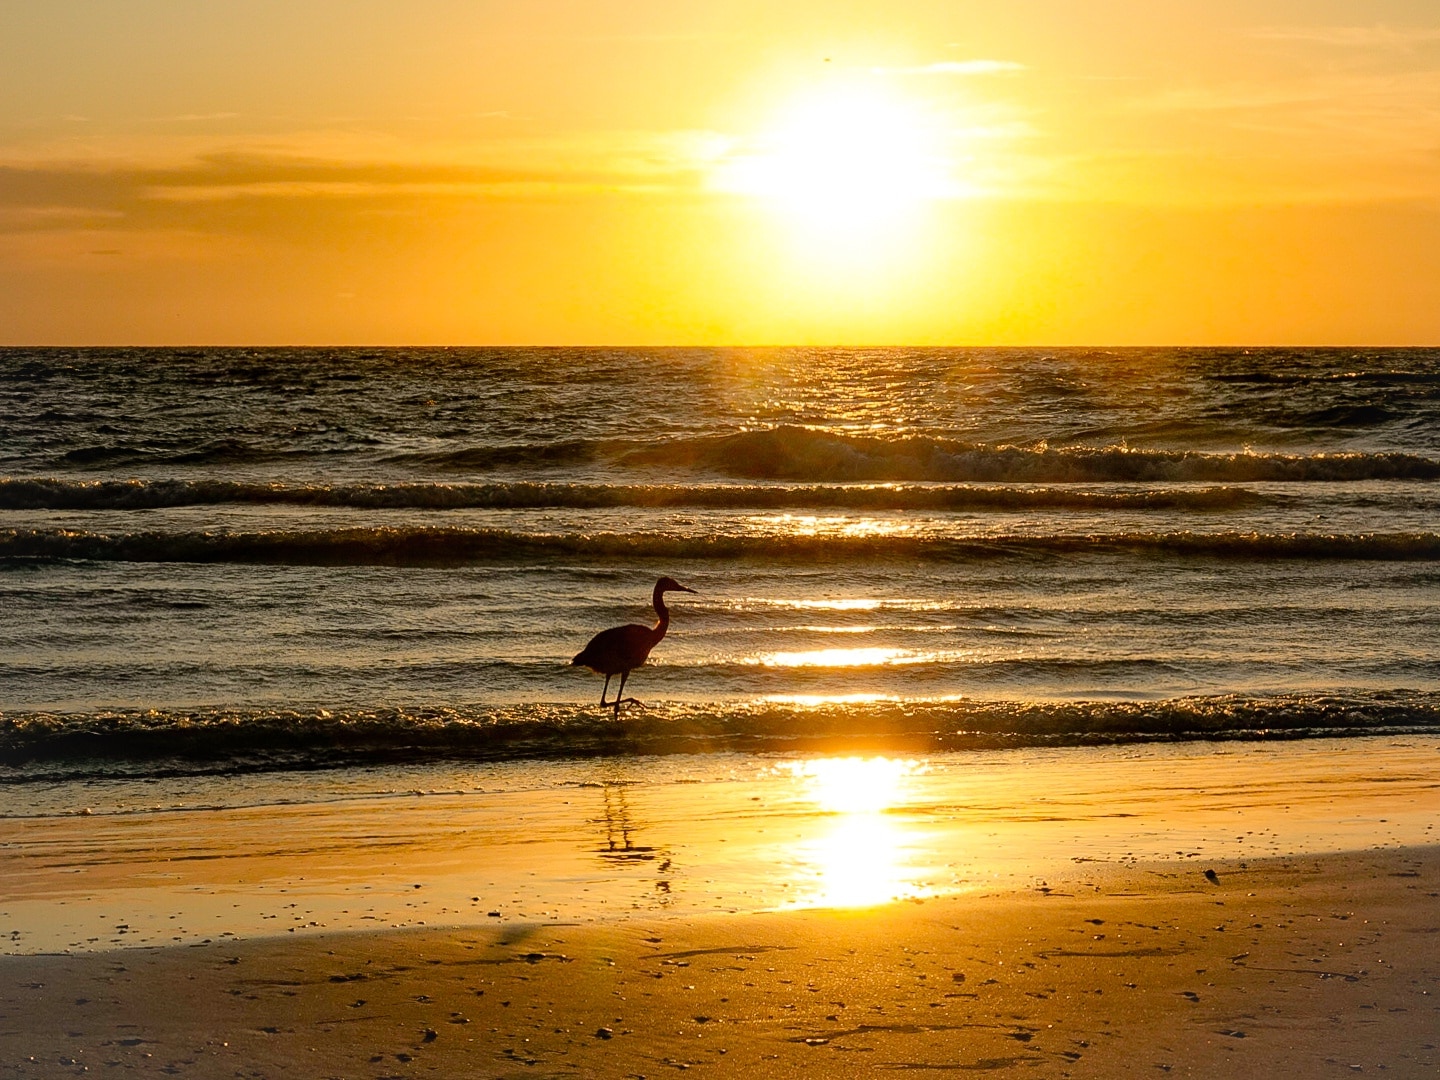 A reddish Egret watching the Sunset!